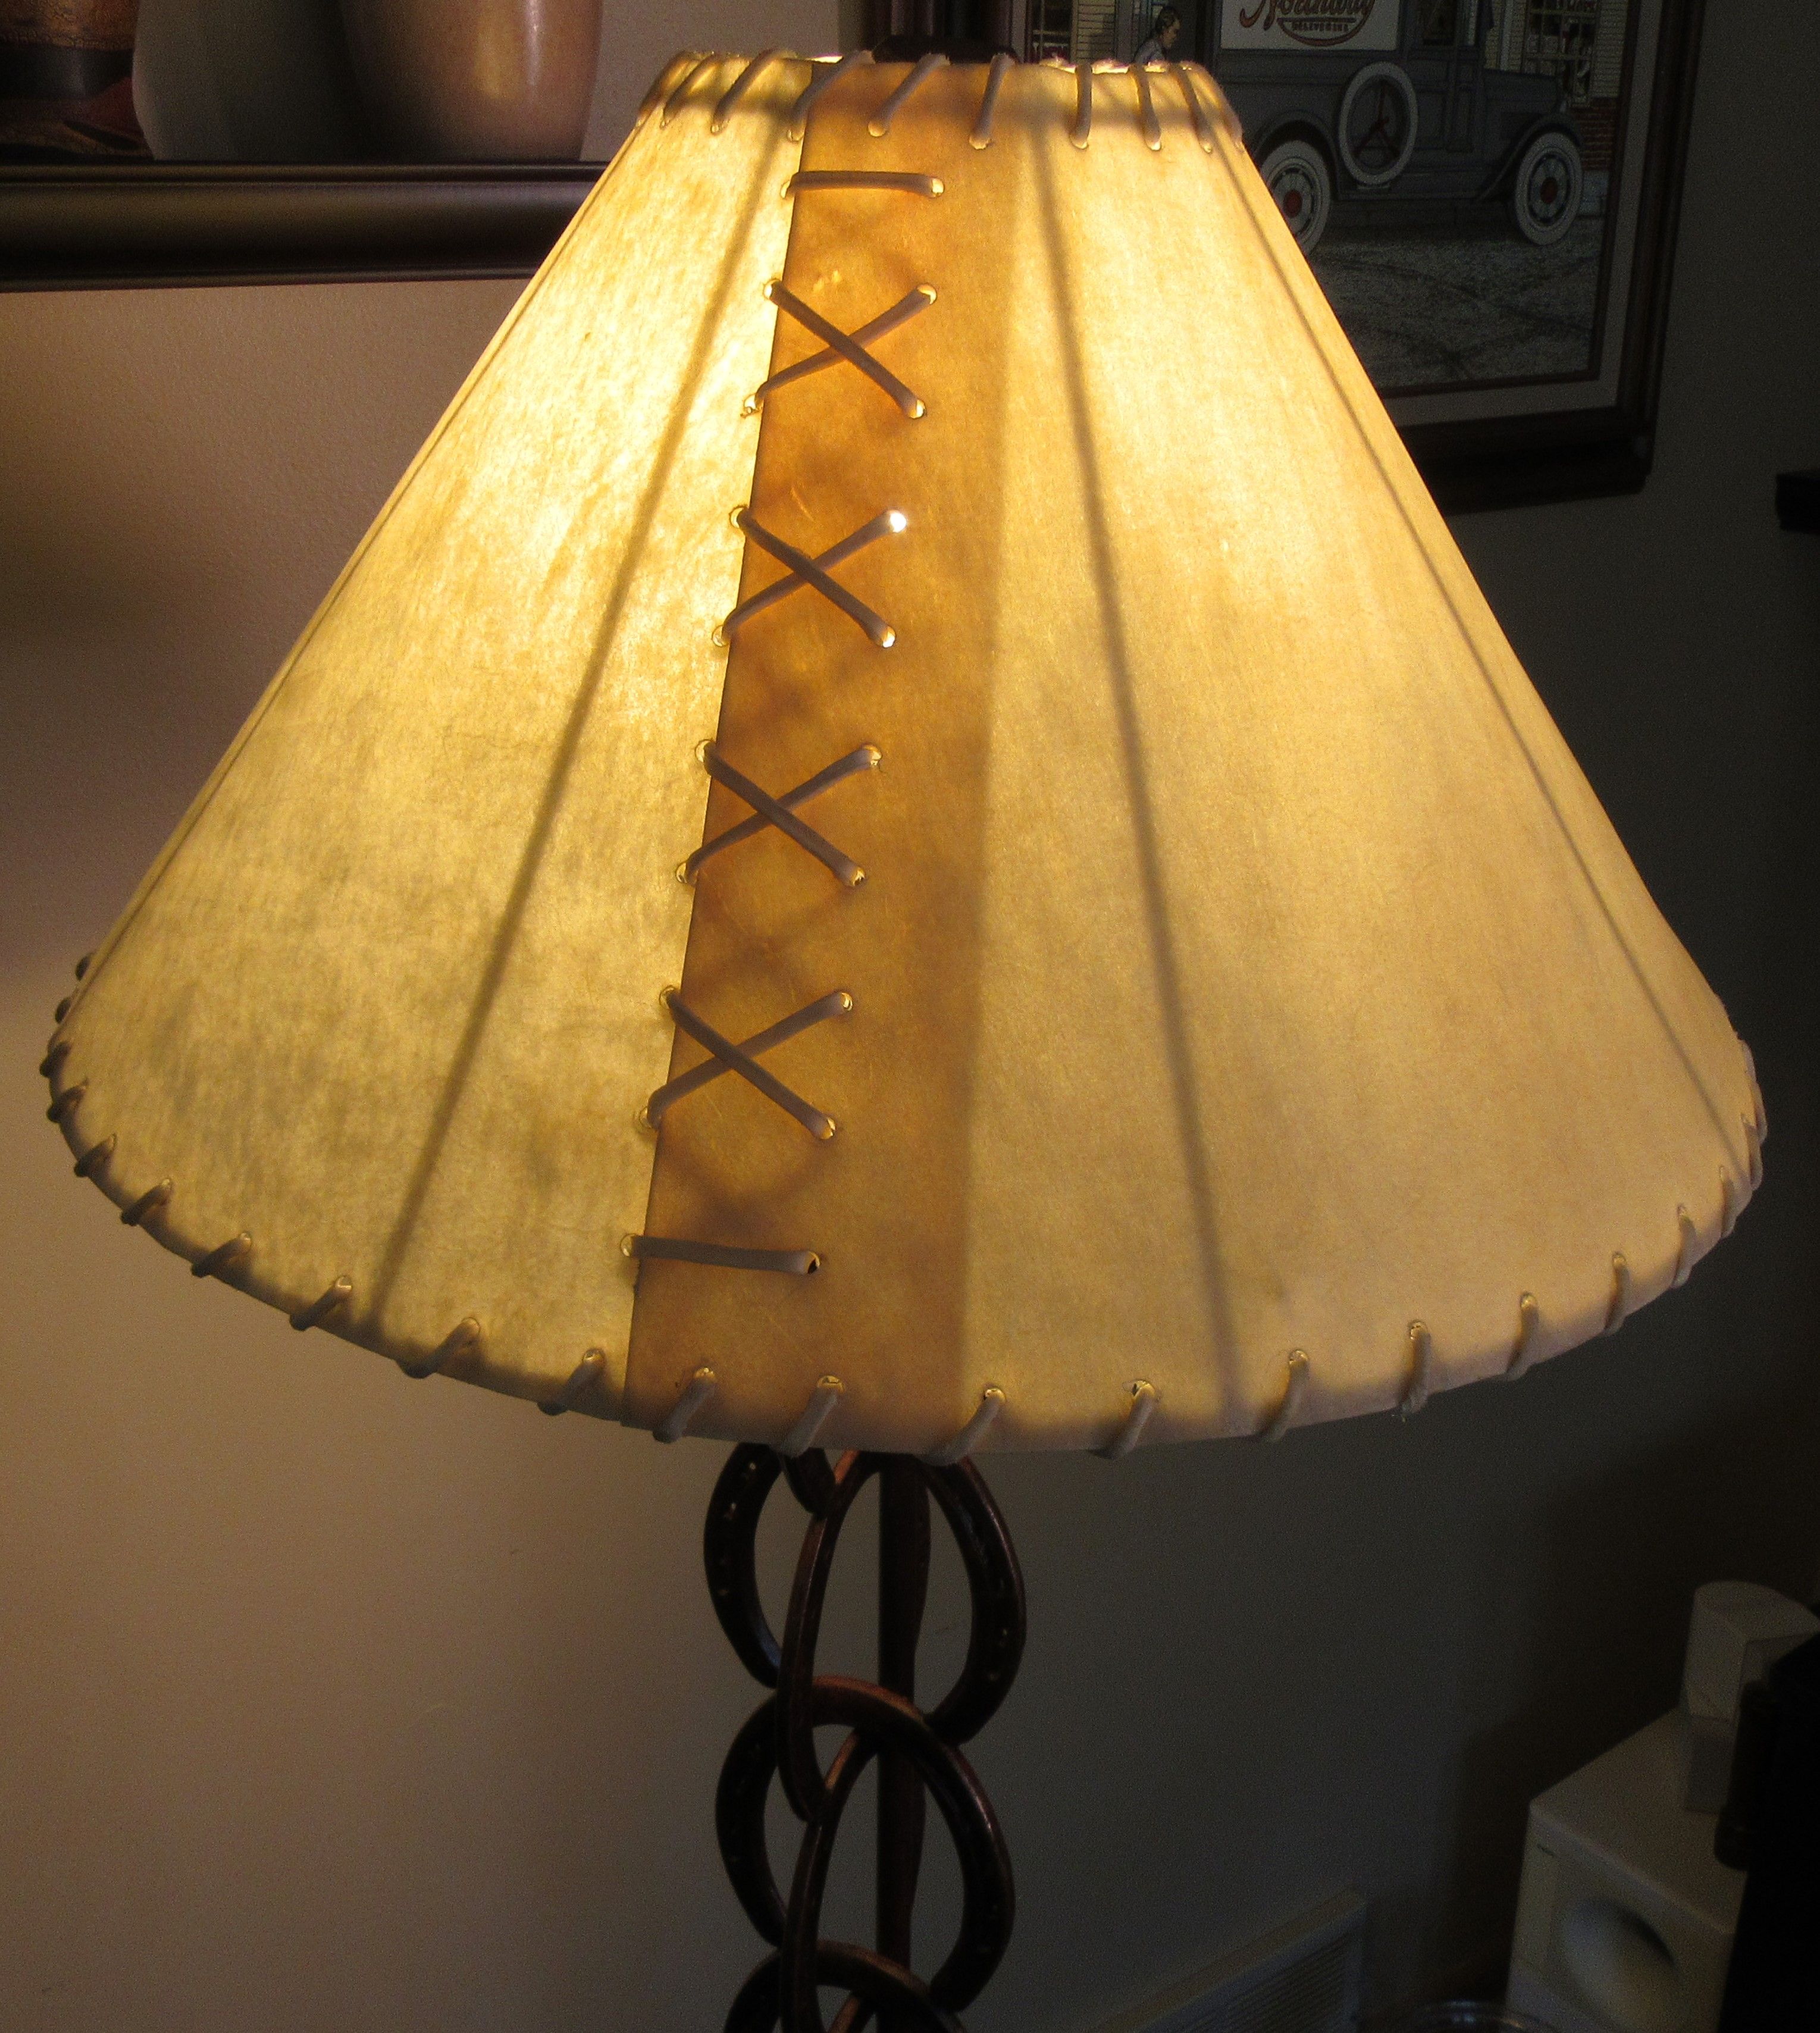 Western Horseshoe Floor Lamp with Rawhide Shade 64" tall